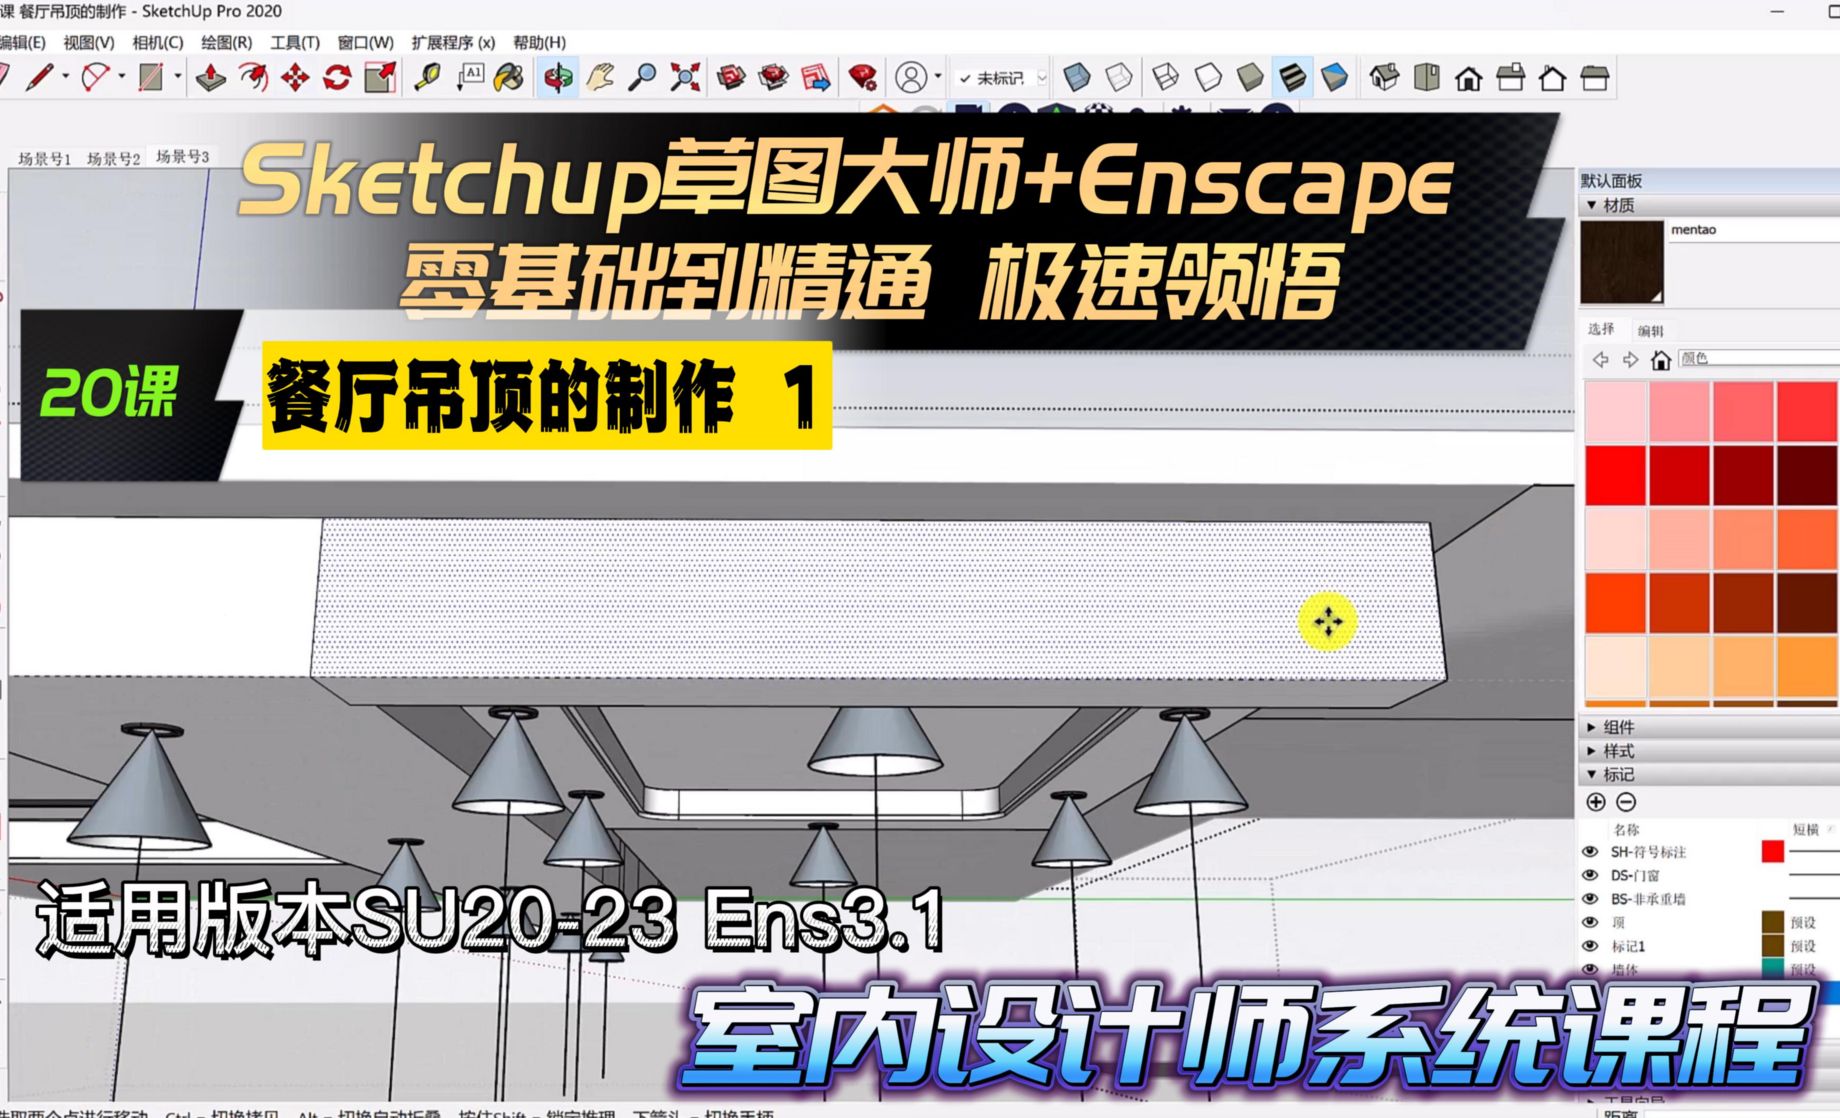 Sketchup+Enscape 室内设计极速领悟-餐厅吊顶的制作1